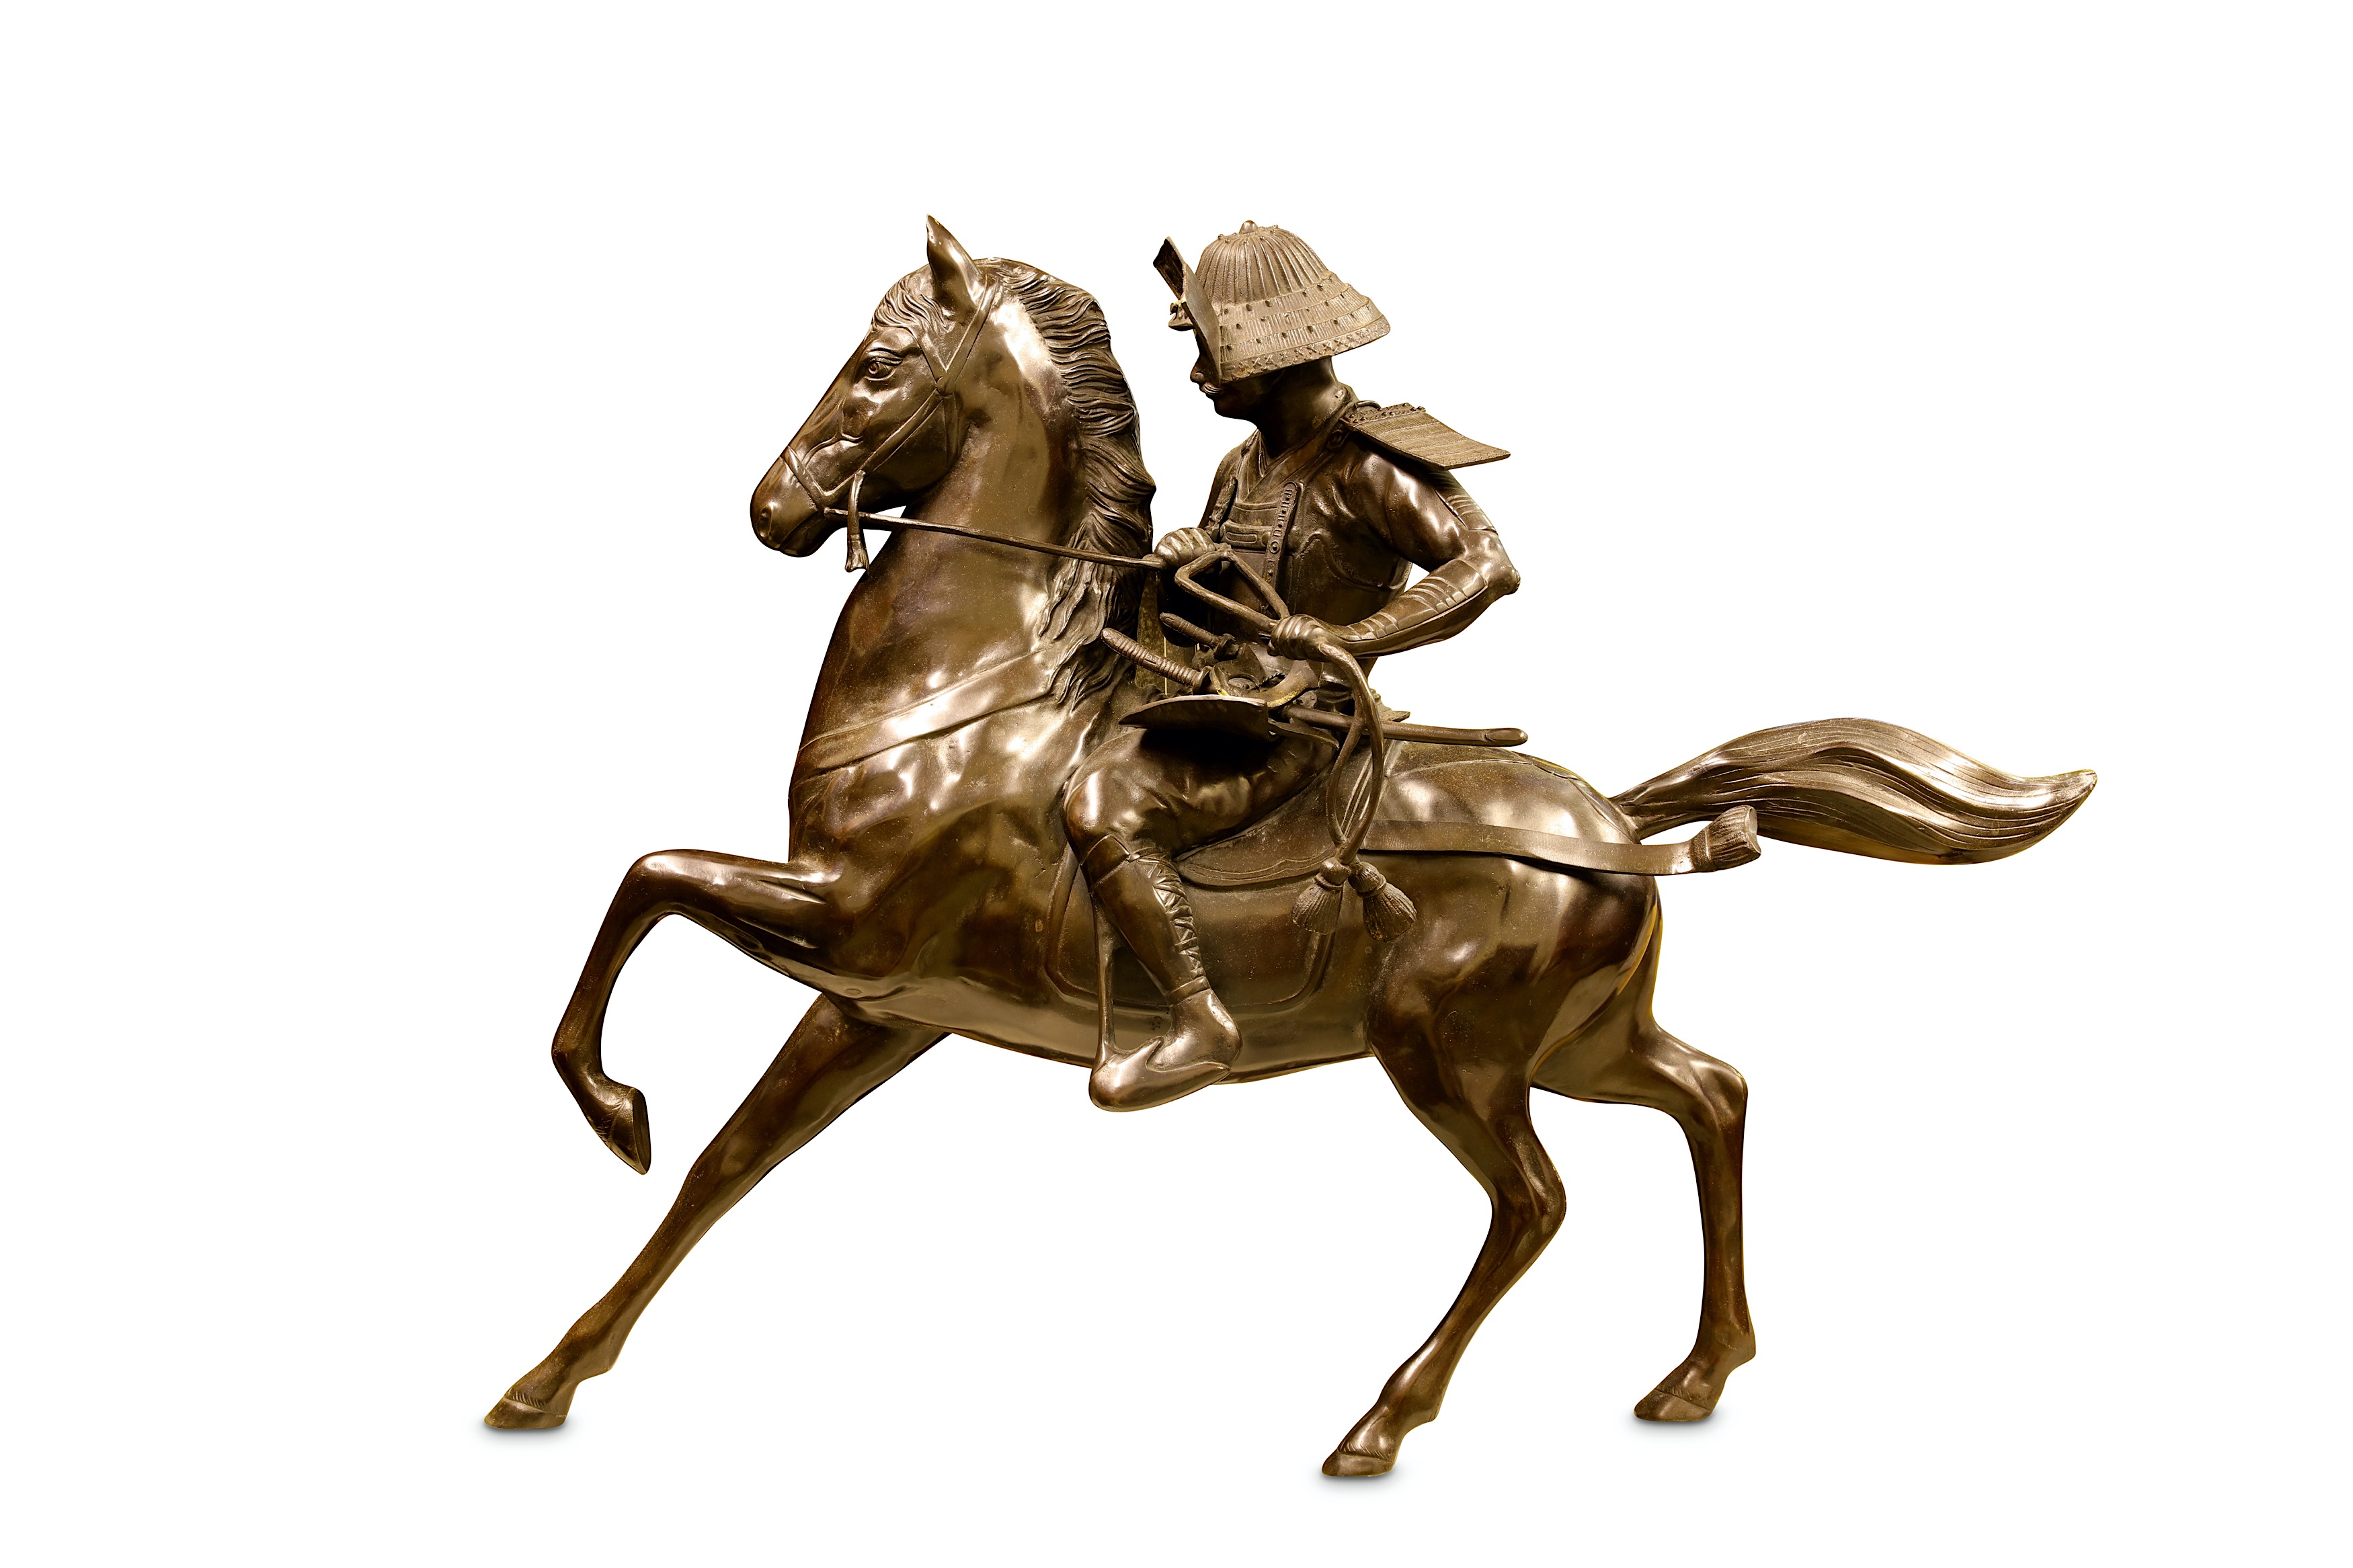 A LARGE JAPANESE MEIJI PERIOD EQUESTRIAN BRONZE OF A SAMURAI ON HORSEBACK